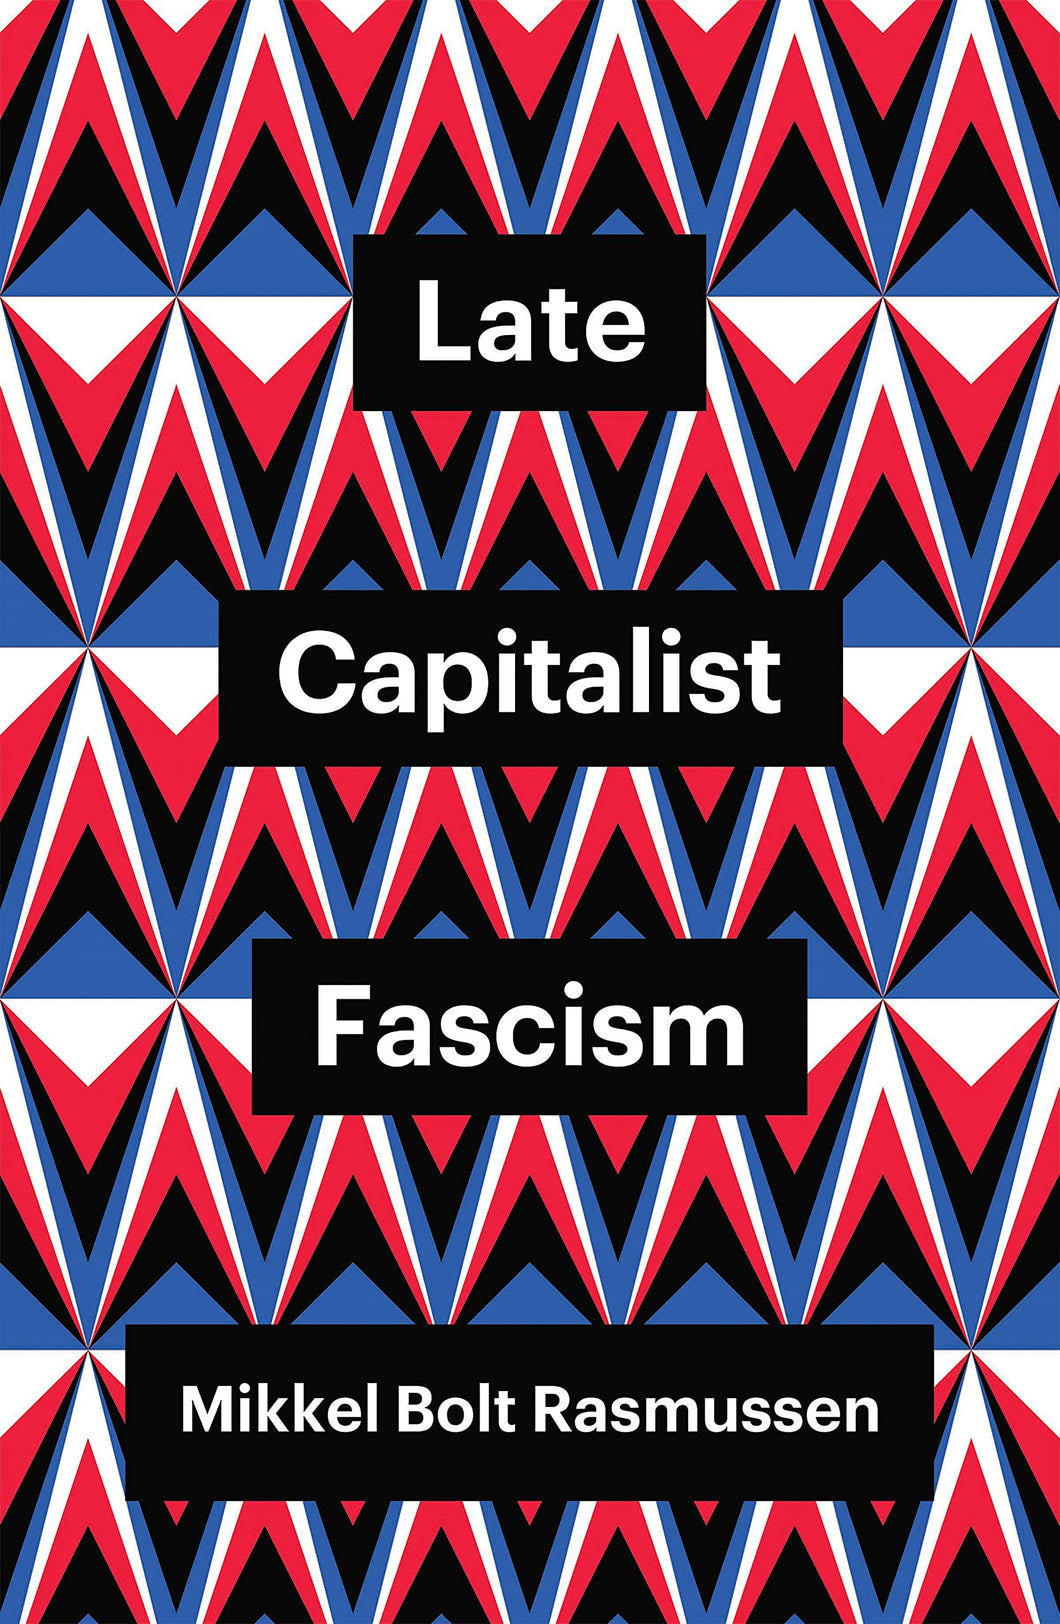 Late Capitalist Fascism ร้านหนังสือและสิ่งของ เป็นร้านหนังสือภาษาอังกฤษหายาก และร้านกาแฟ หรือ บุ๊คคาเฟ่ ตั้งอยู่สุขุมวิท กรุงเทพ